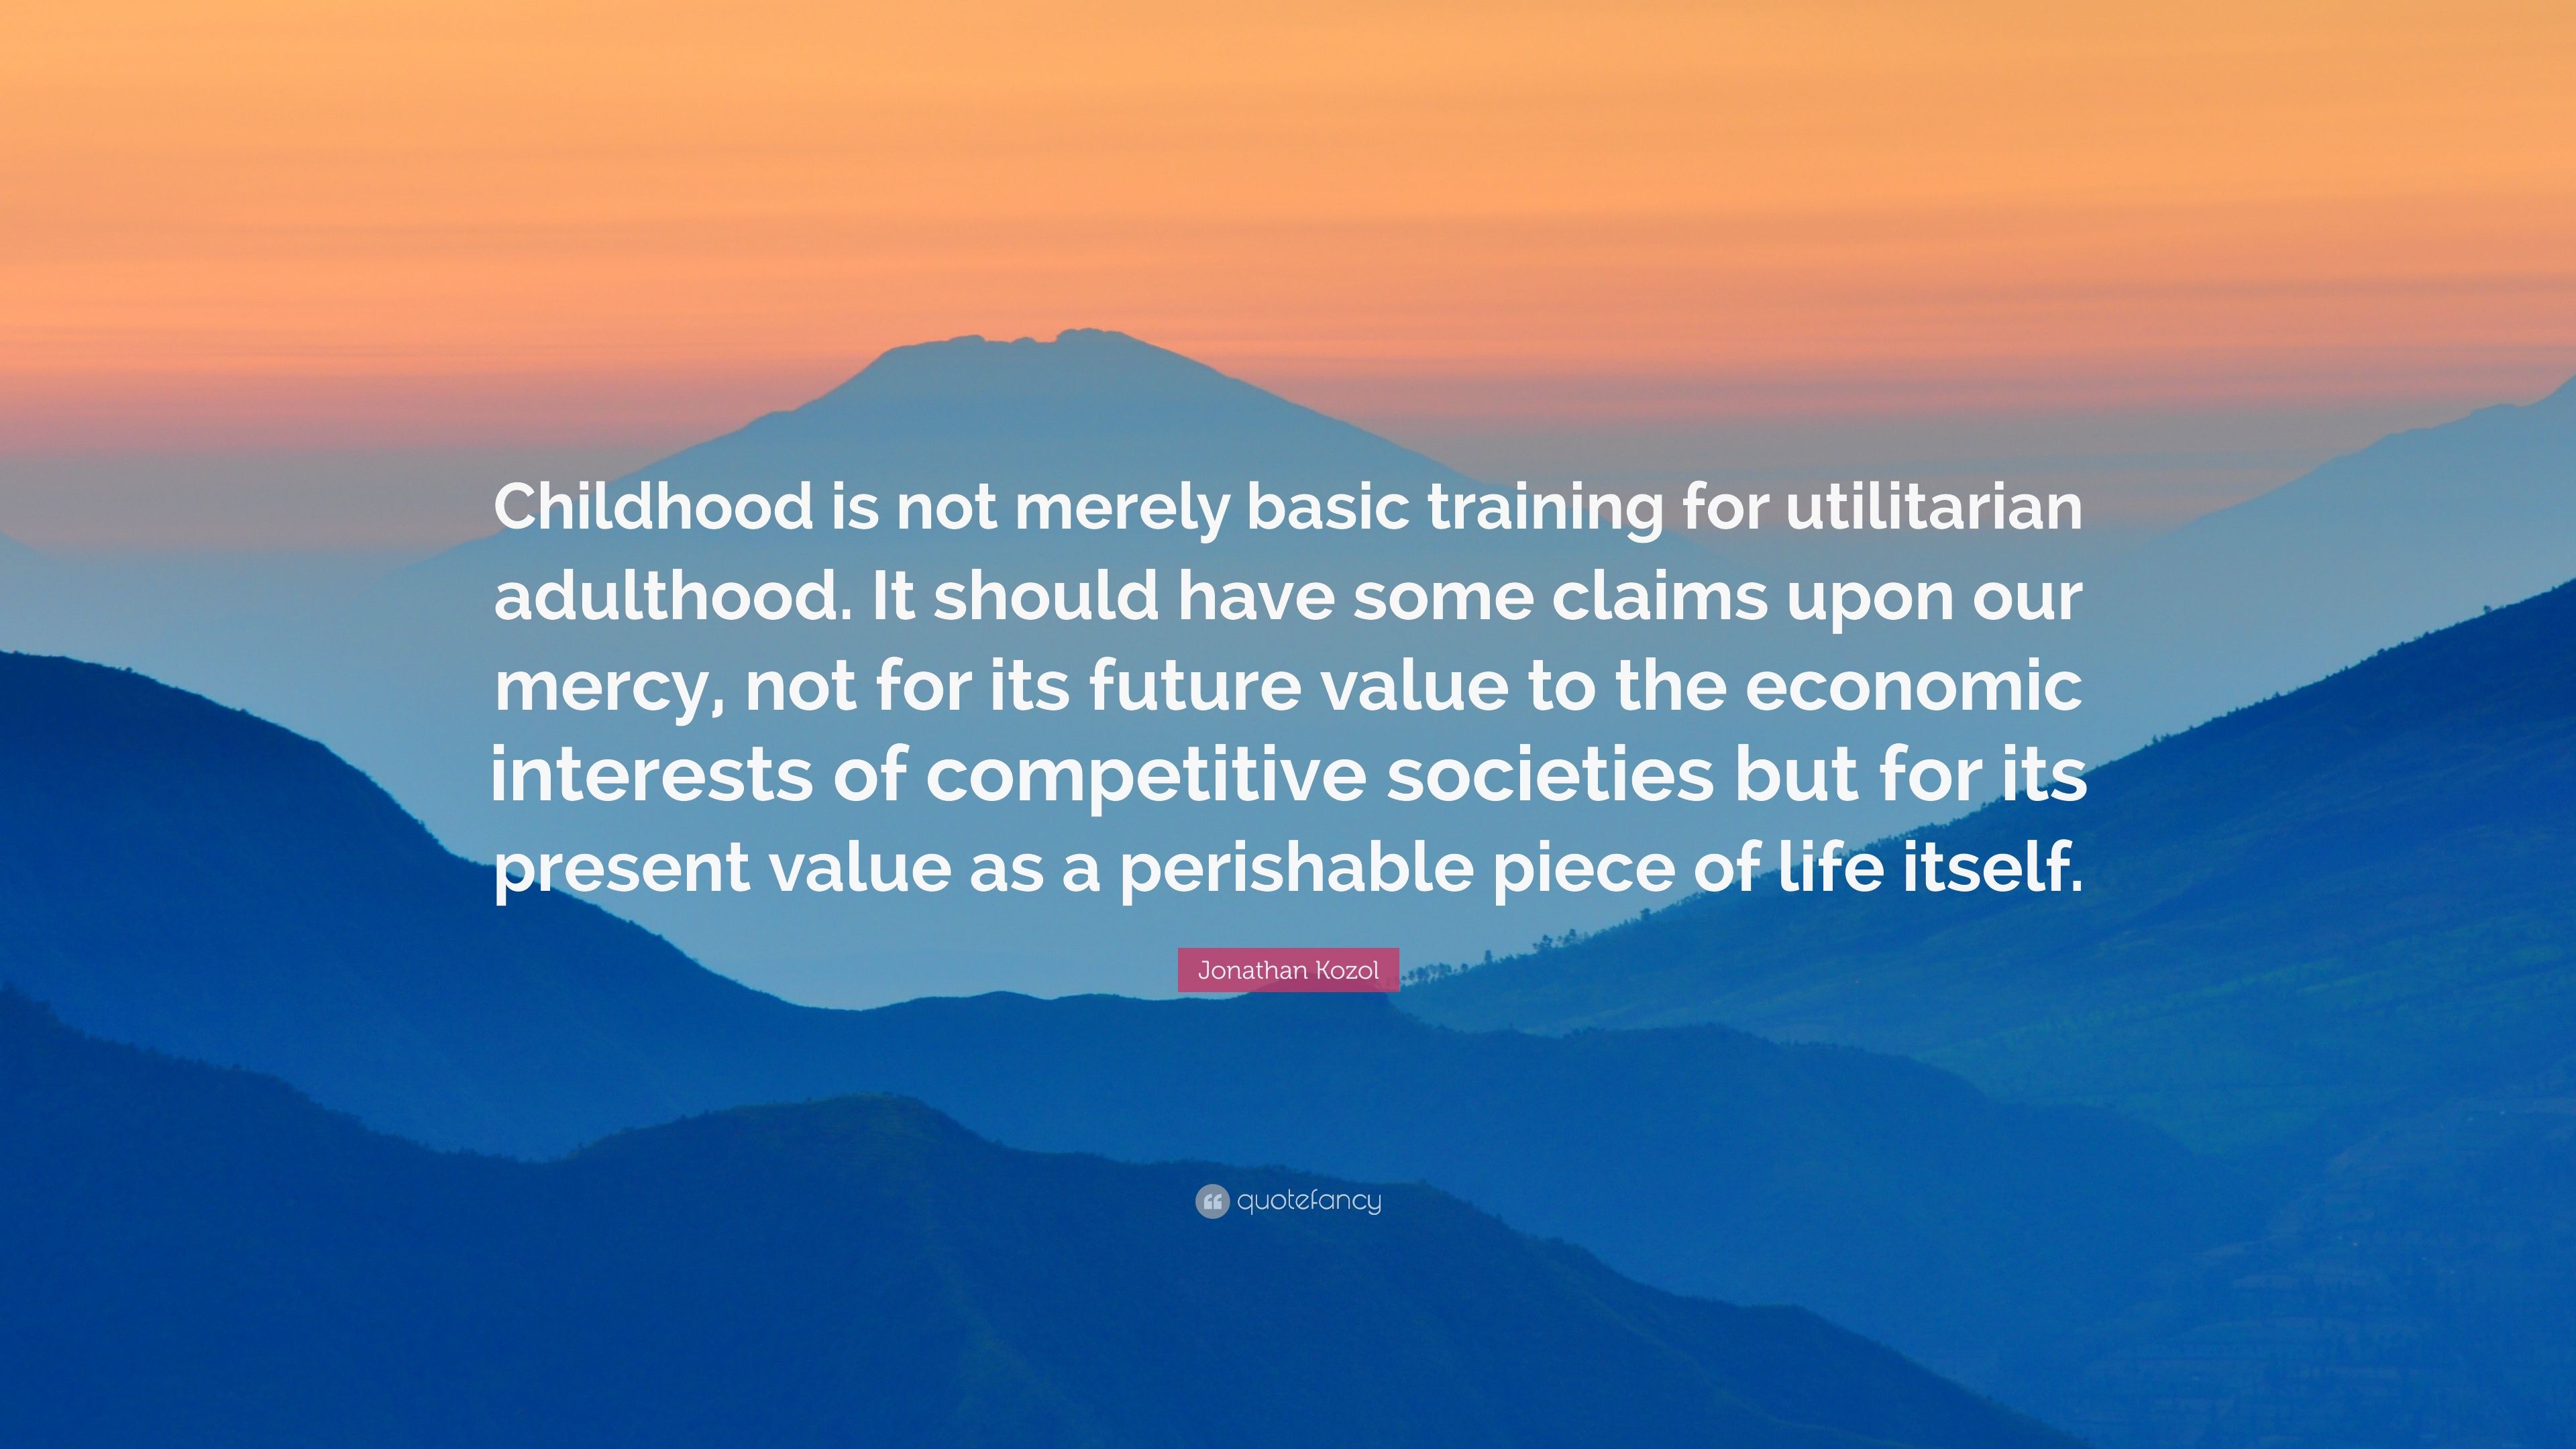 Jonathan Kozol Quote: “Childhood is not merely basic training